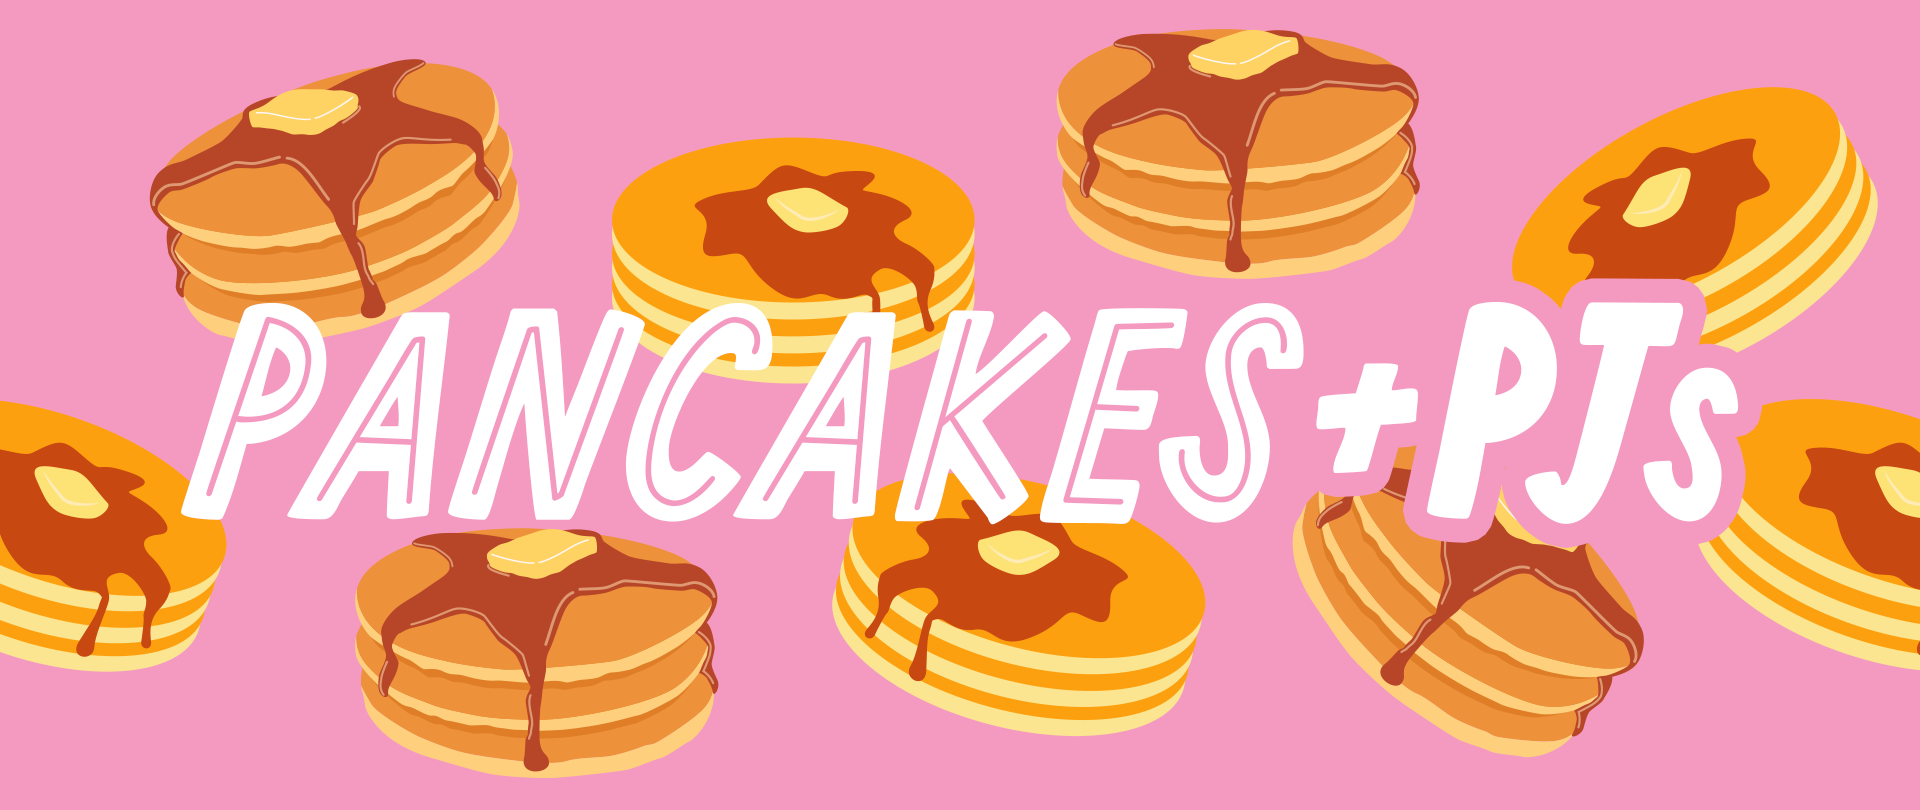 Pancakes + PJs
Mother + Daughter FUN!
Friday, May 10
